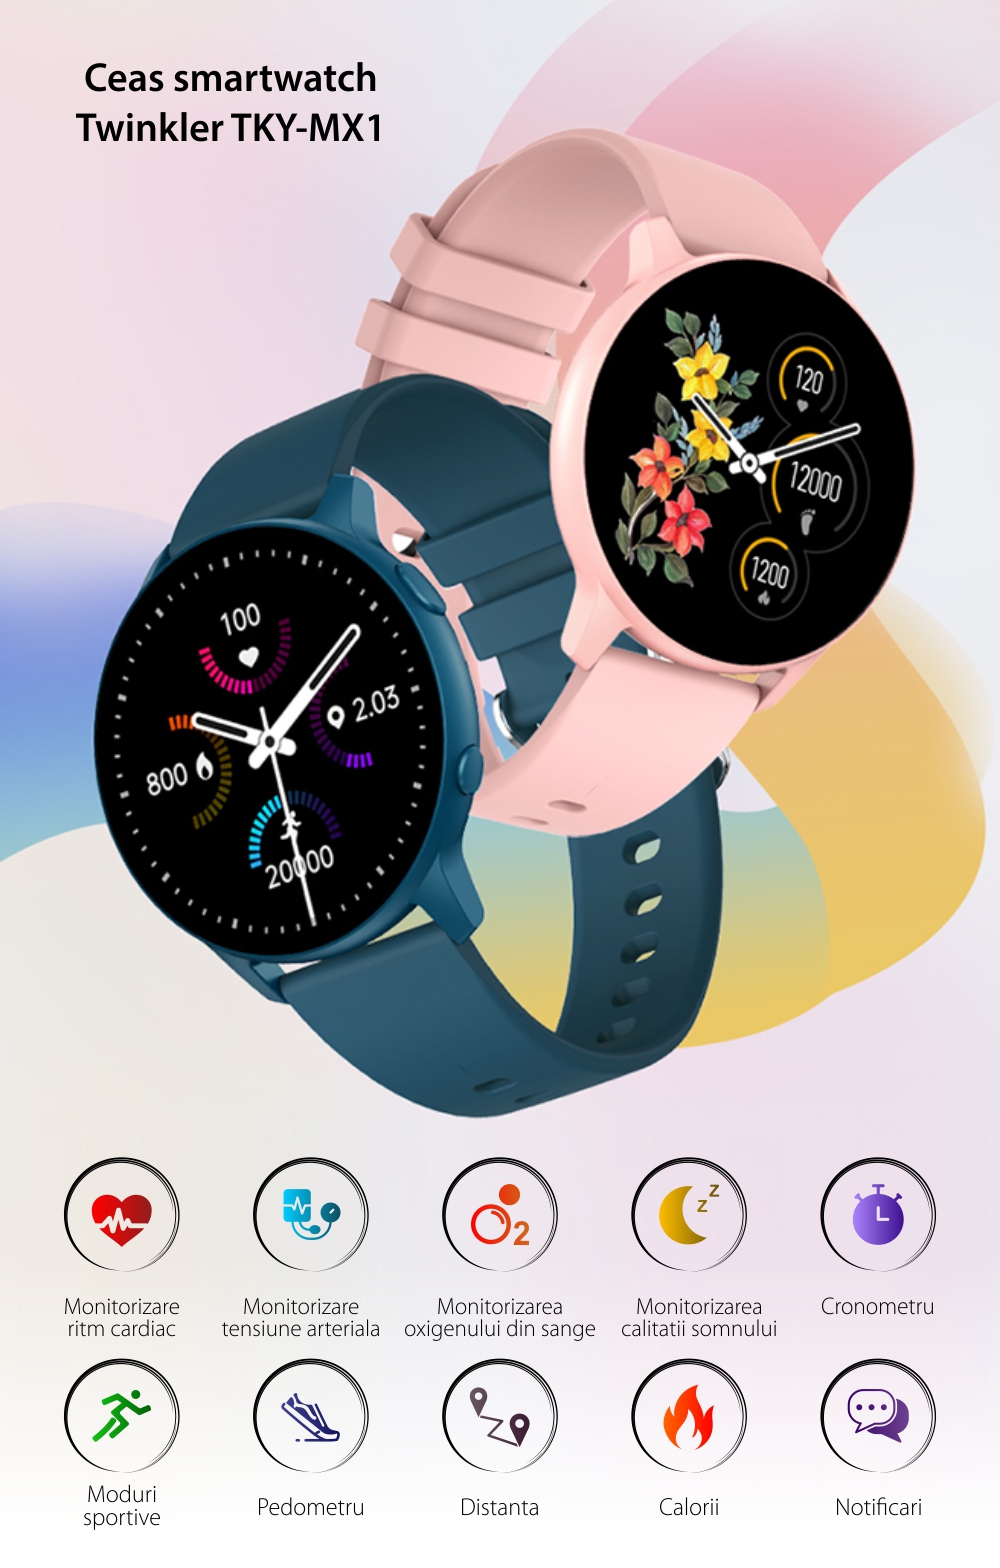 Ceas Smartwatch Twinkler TKY-MX1 cu Display 1.32 inch, Notificari, Distanta, Calorii, Monitorizarea sanatate, Moduri sport, Roz